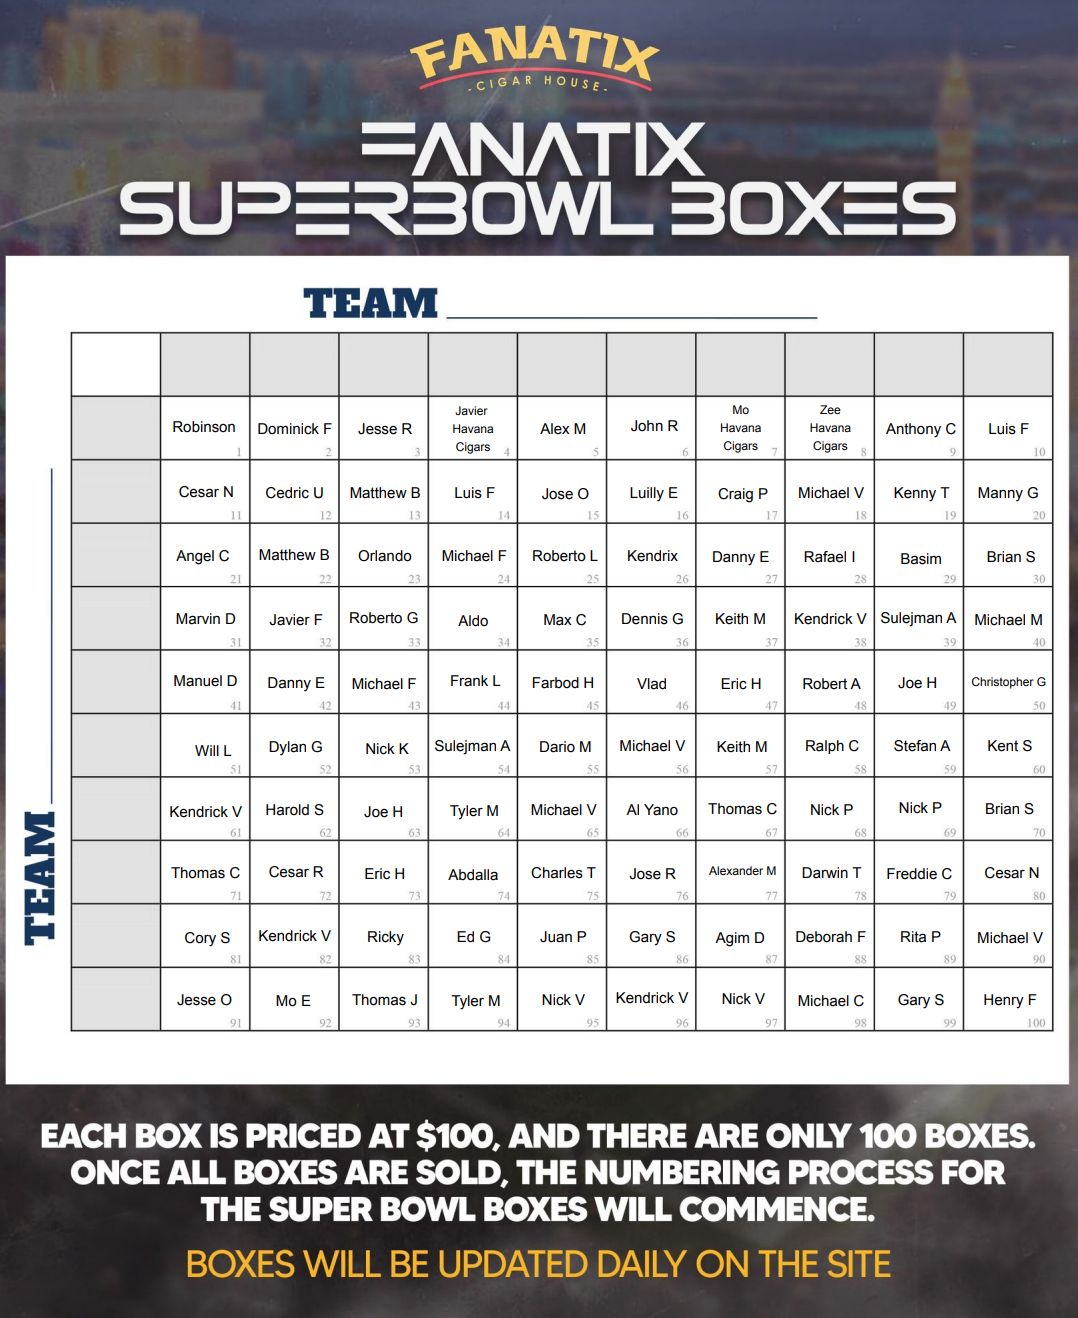 FANATIX SUPER BOWL BOXES